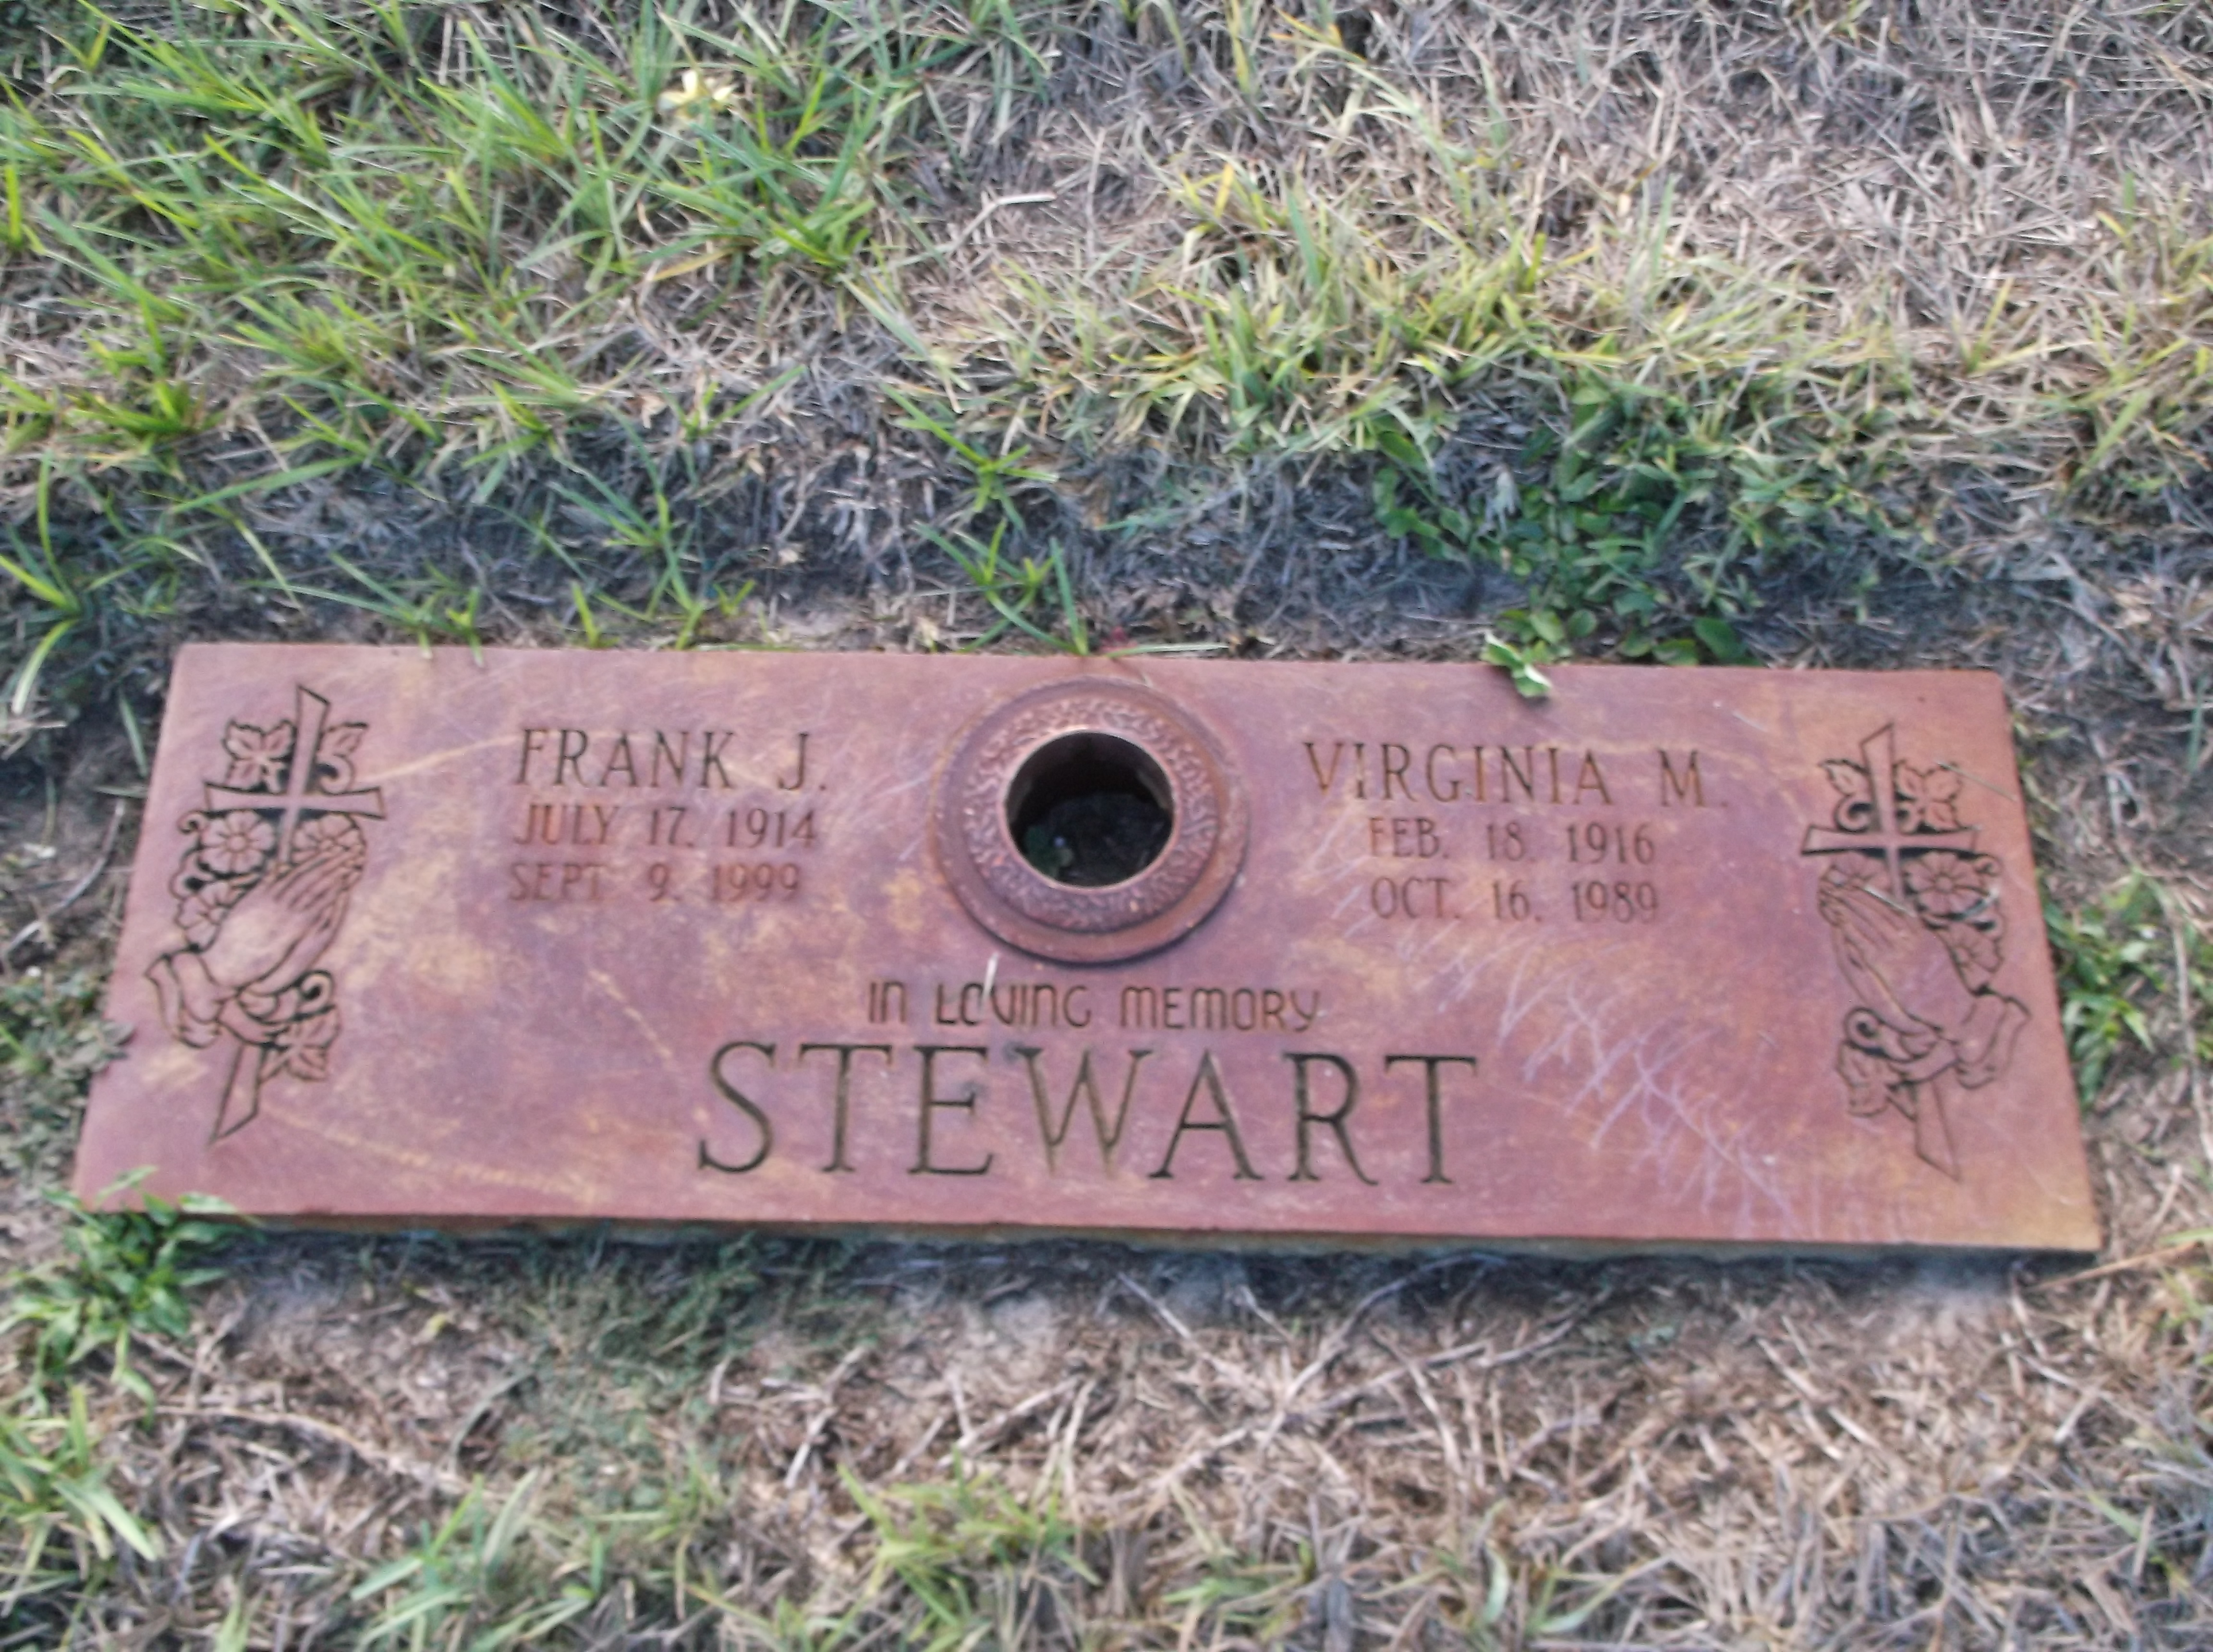 Frank J Stewart